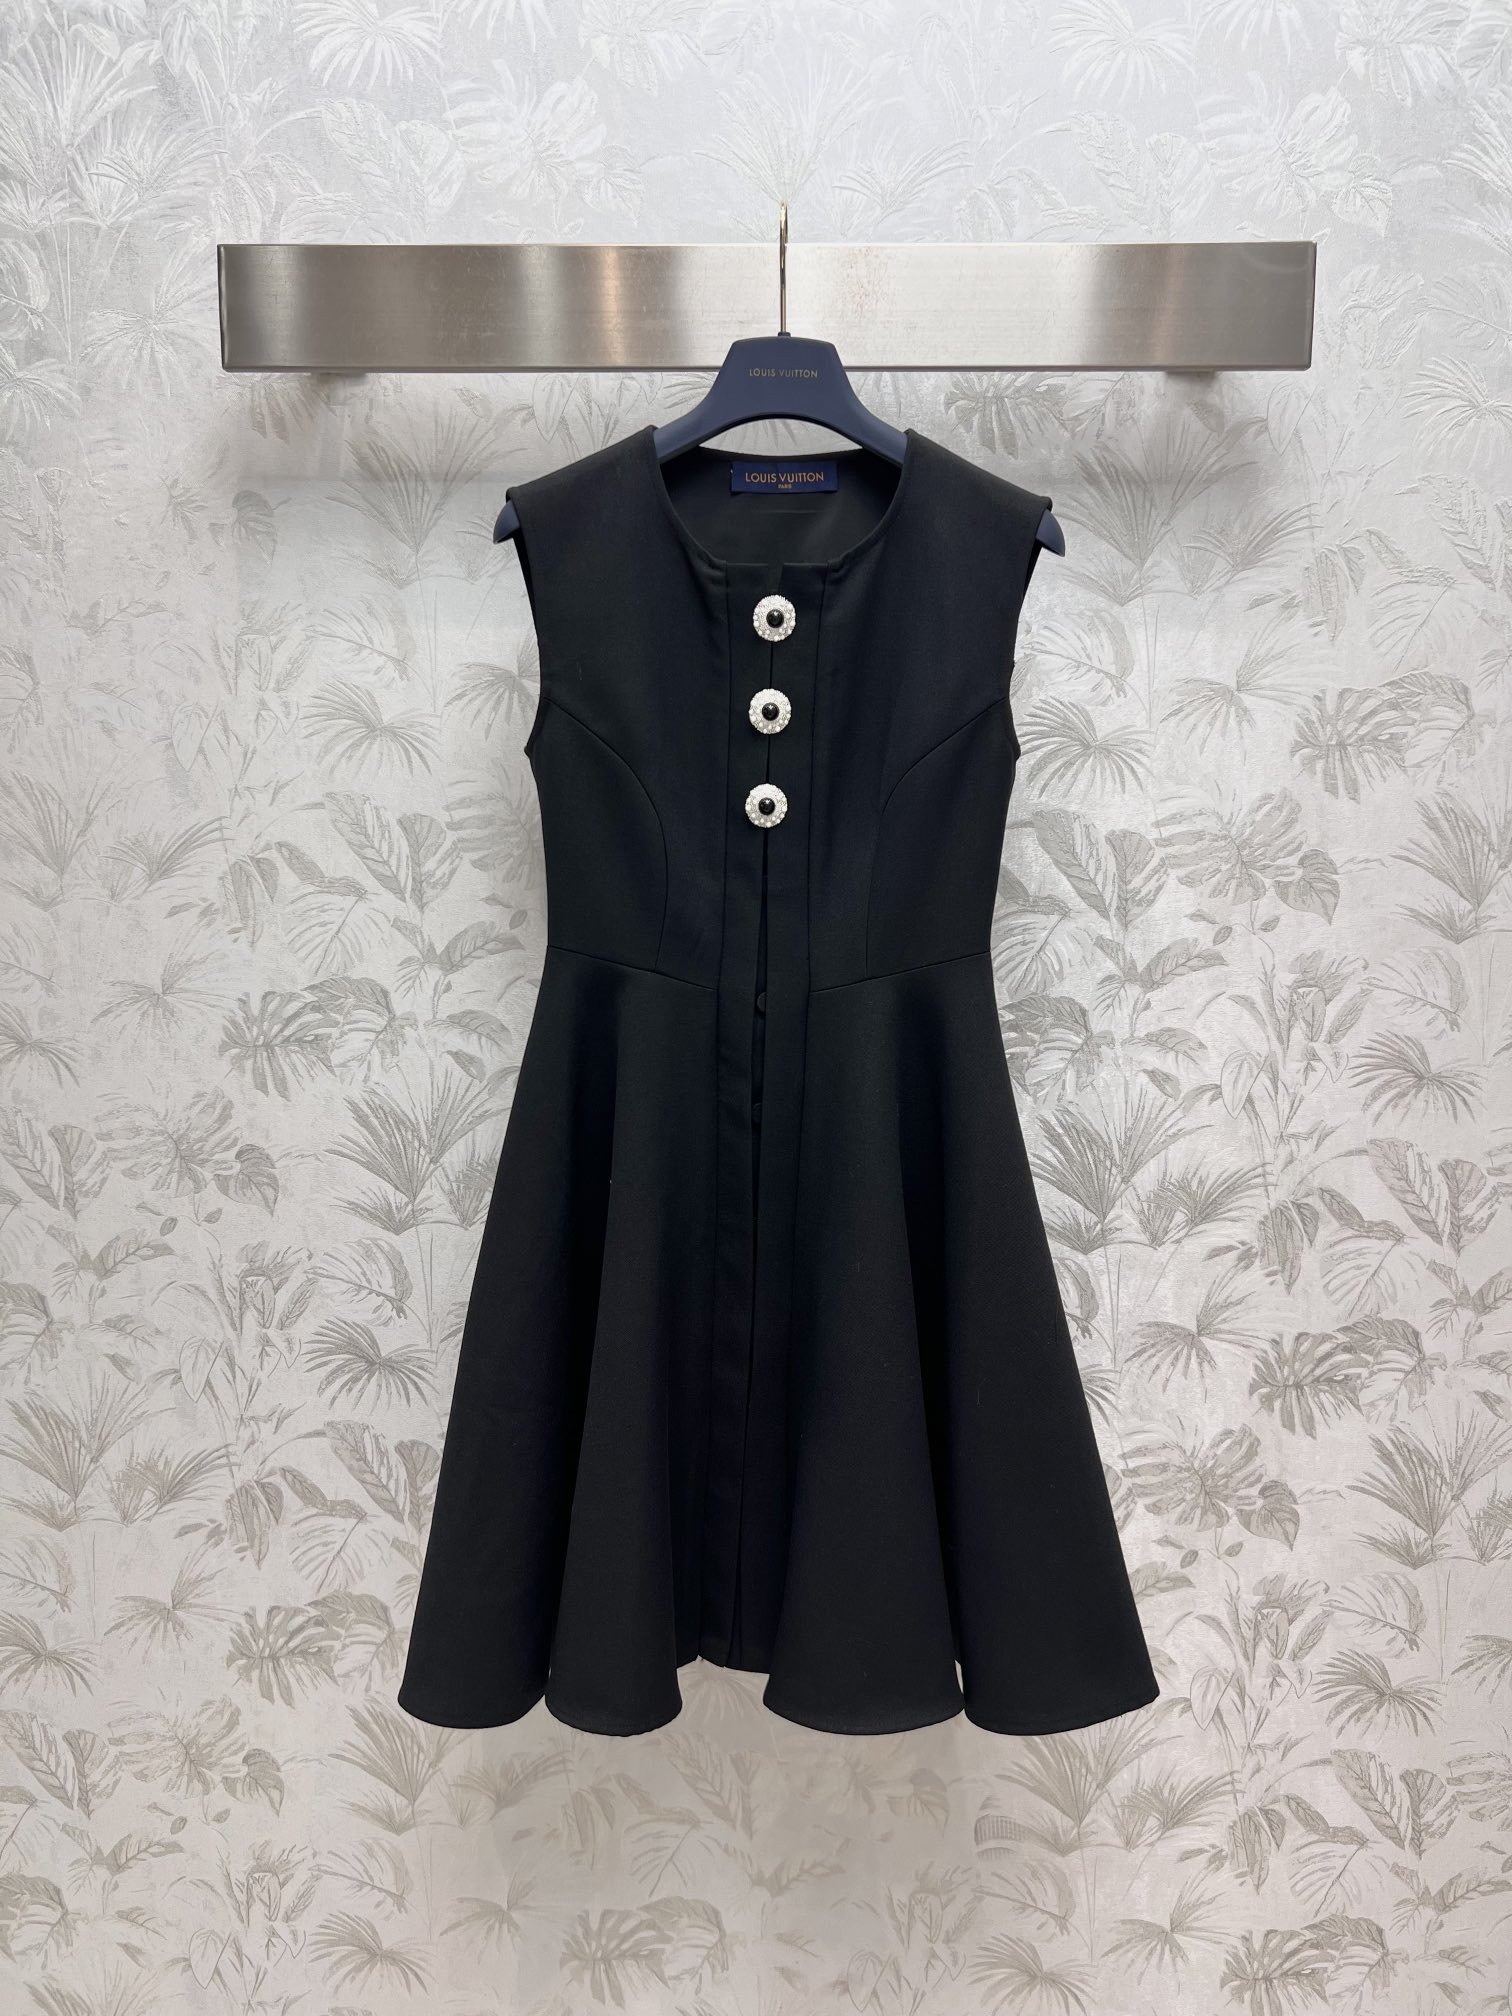 L家24春夏新品时髦优雅的小黑裙宝石镶嵌纽扣装饰连衣裙面料含有羊毛面料挻括有型有质感开模定制的五金配件耗